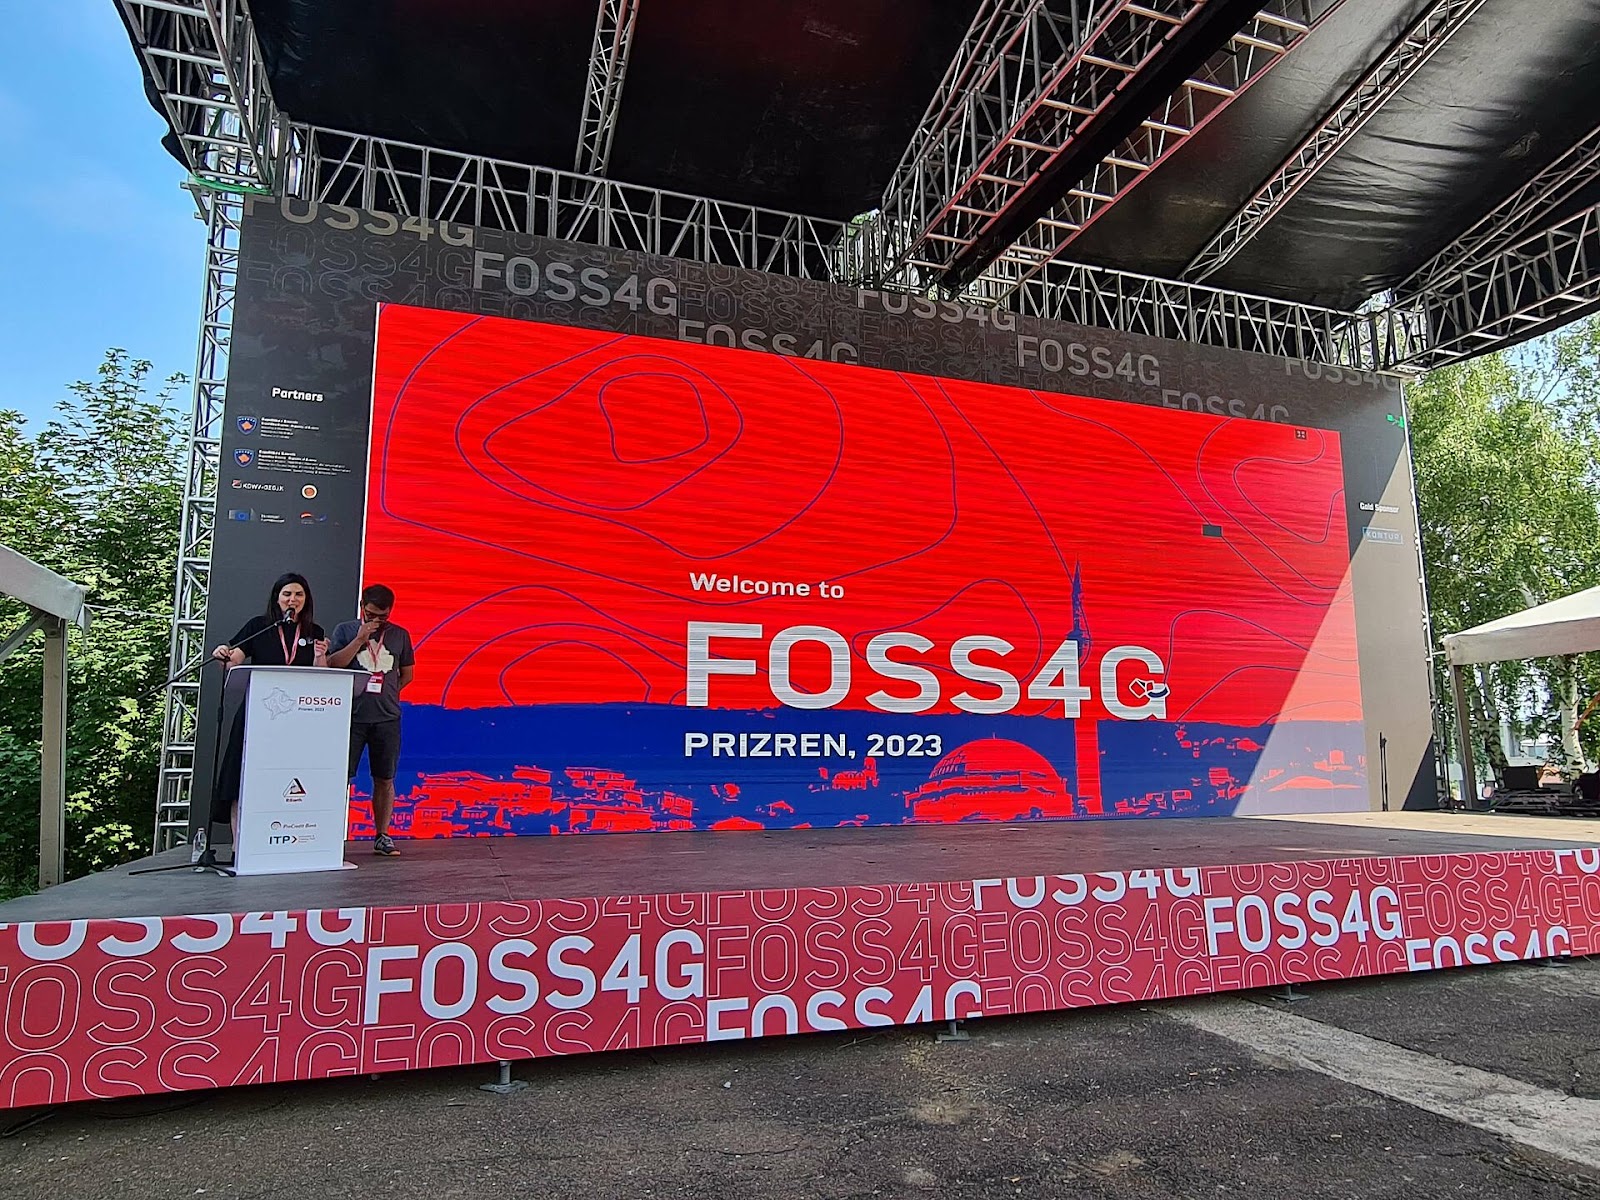 FOSS4G 2023 – Prizren, Kosovo – FLOSSK, 43% OFF